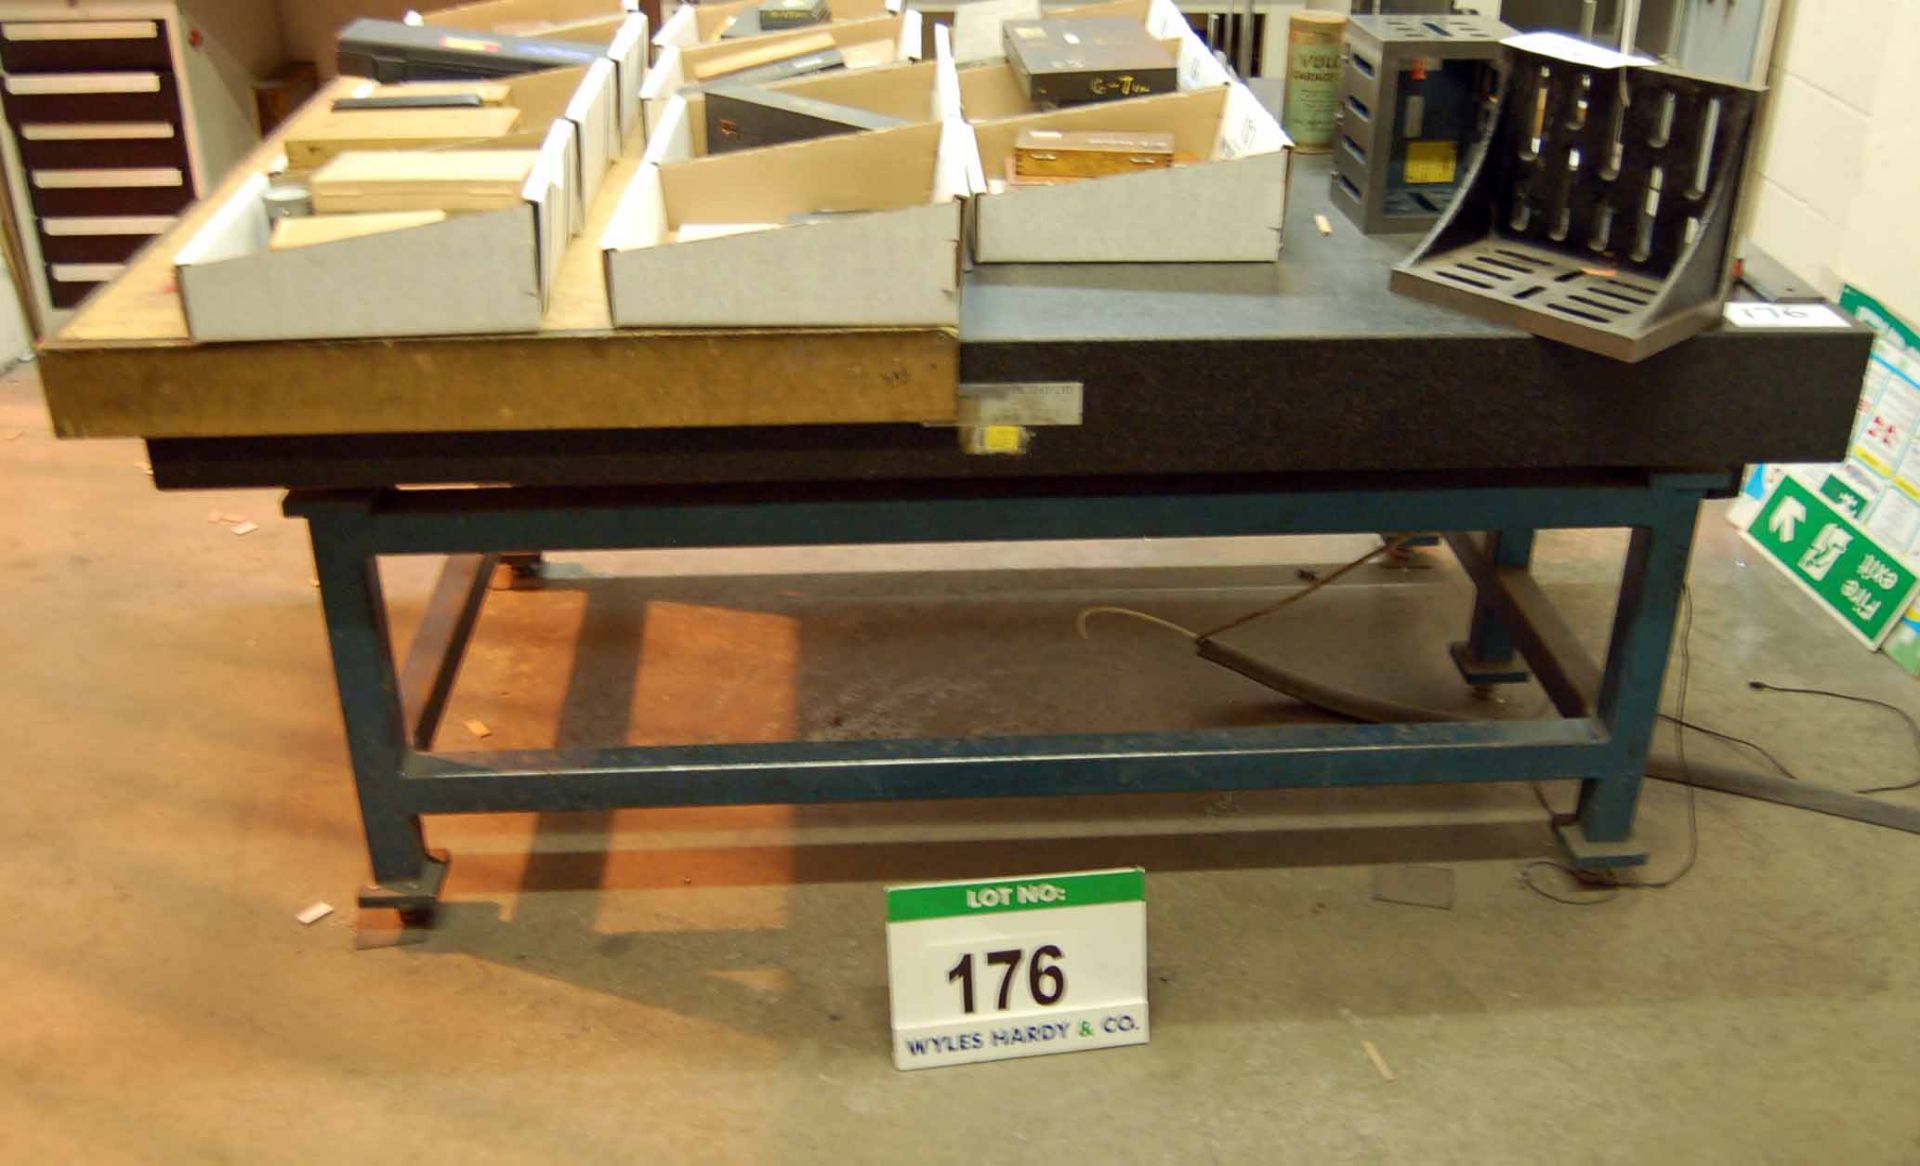 A METROLOGY LTD Granite Surface Table 1850MM x 1250MM Grade 1. Serial No: 1D241 February 2021